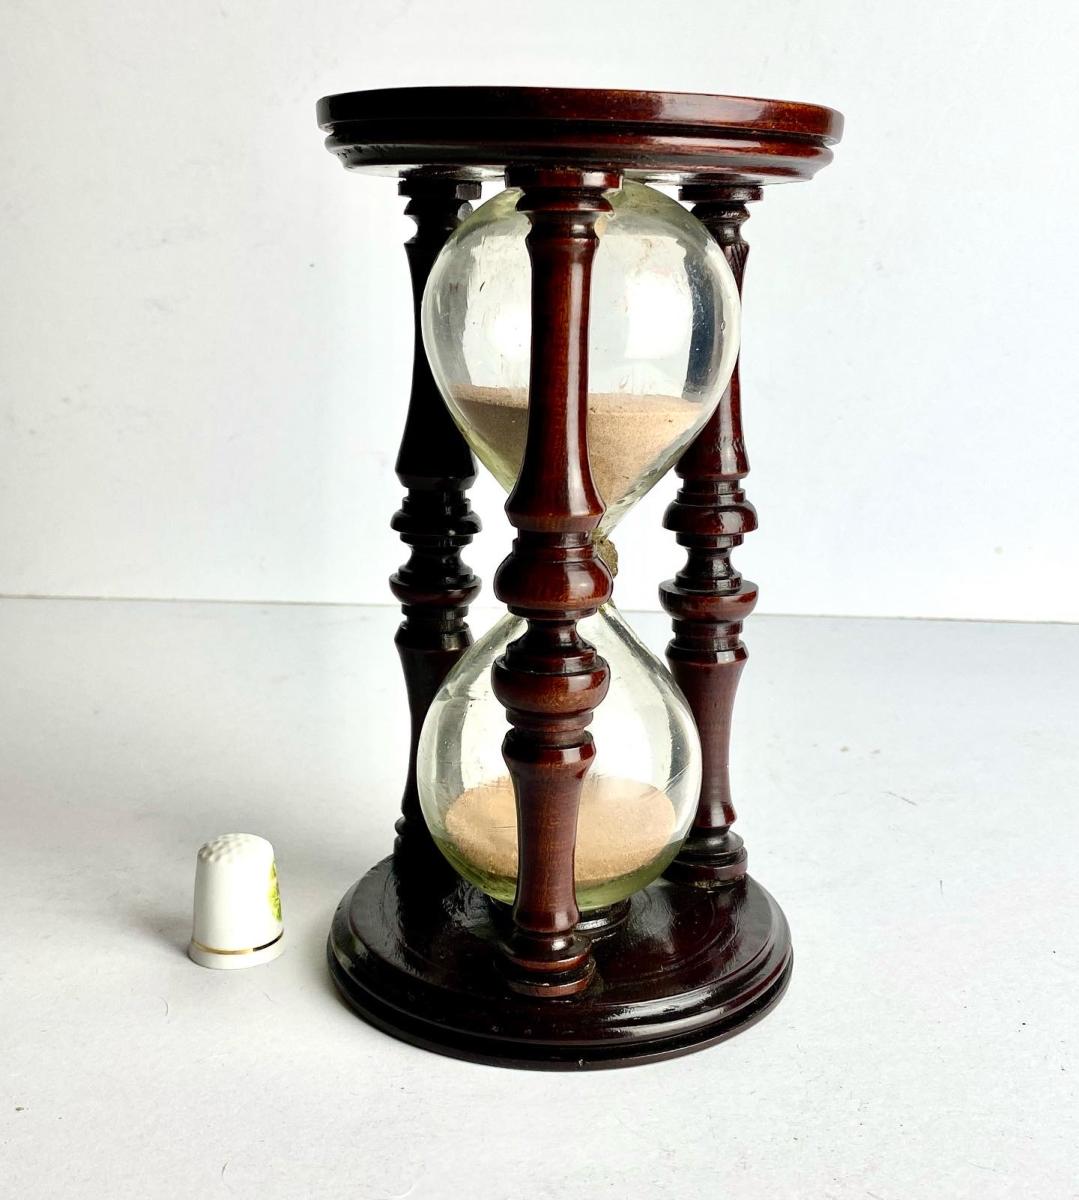 Early 18th Century Walnut Hourglass